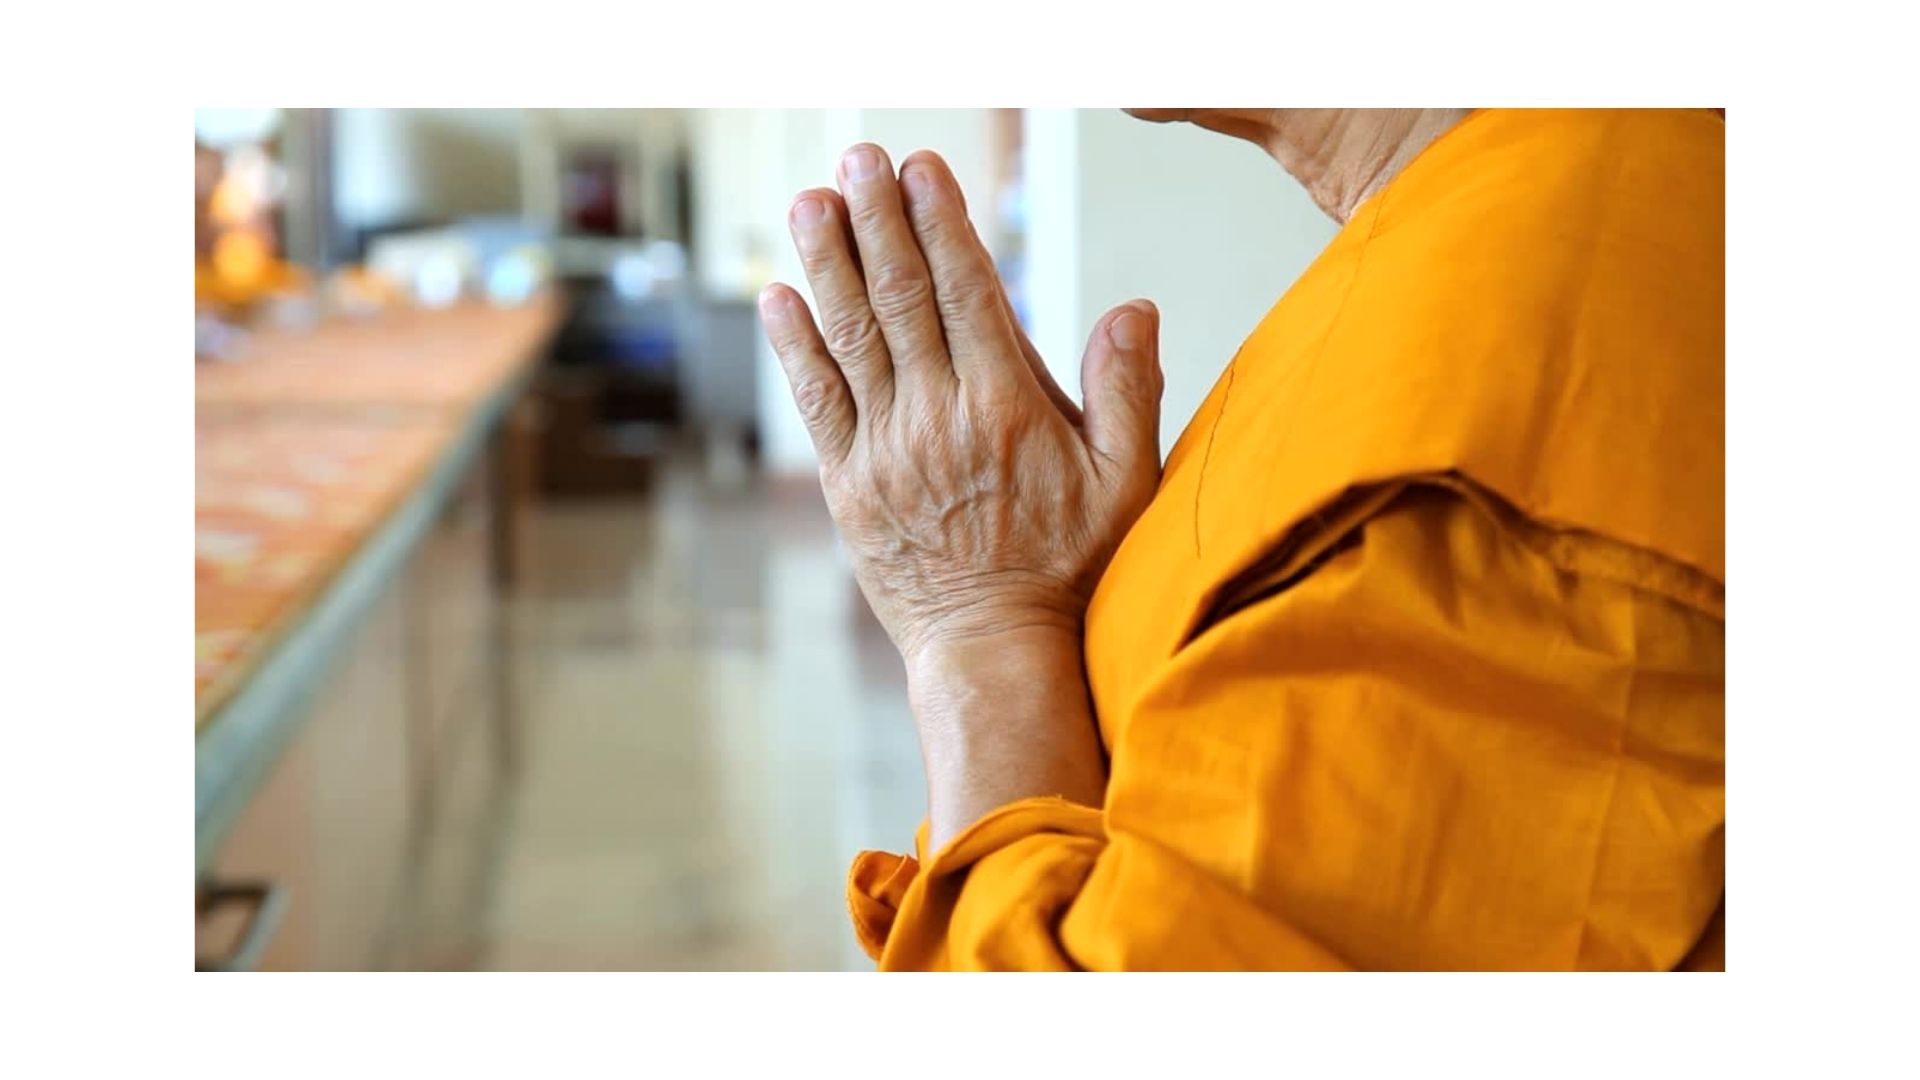 Praying monk at a table